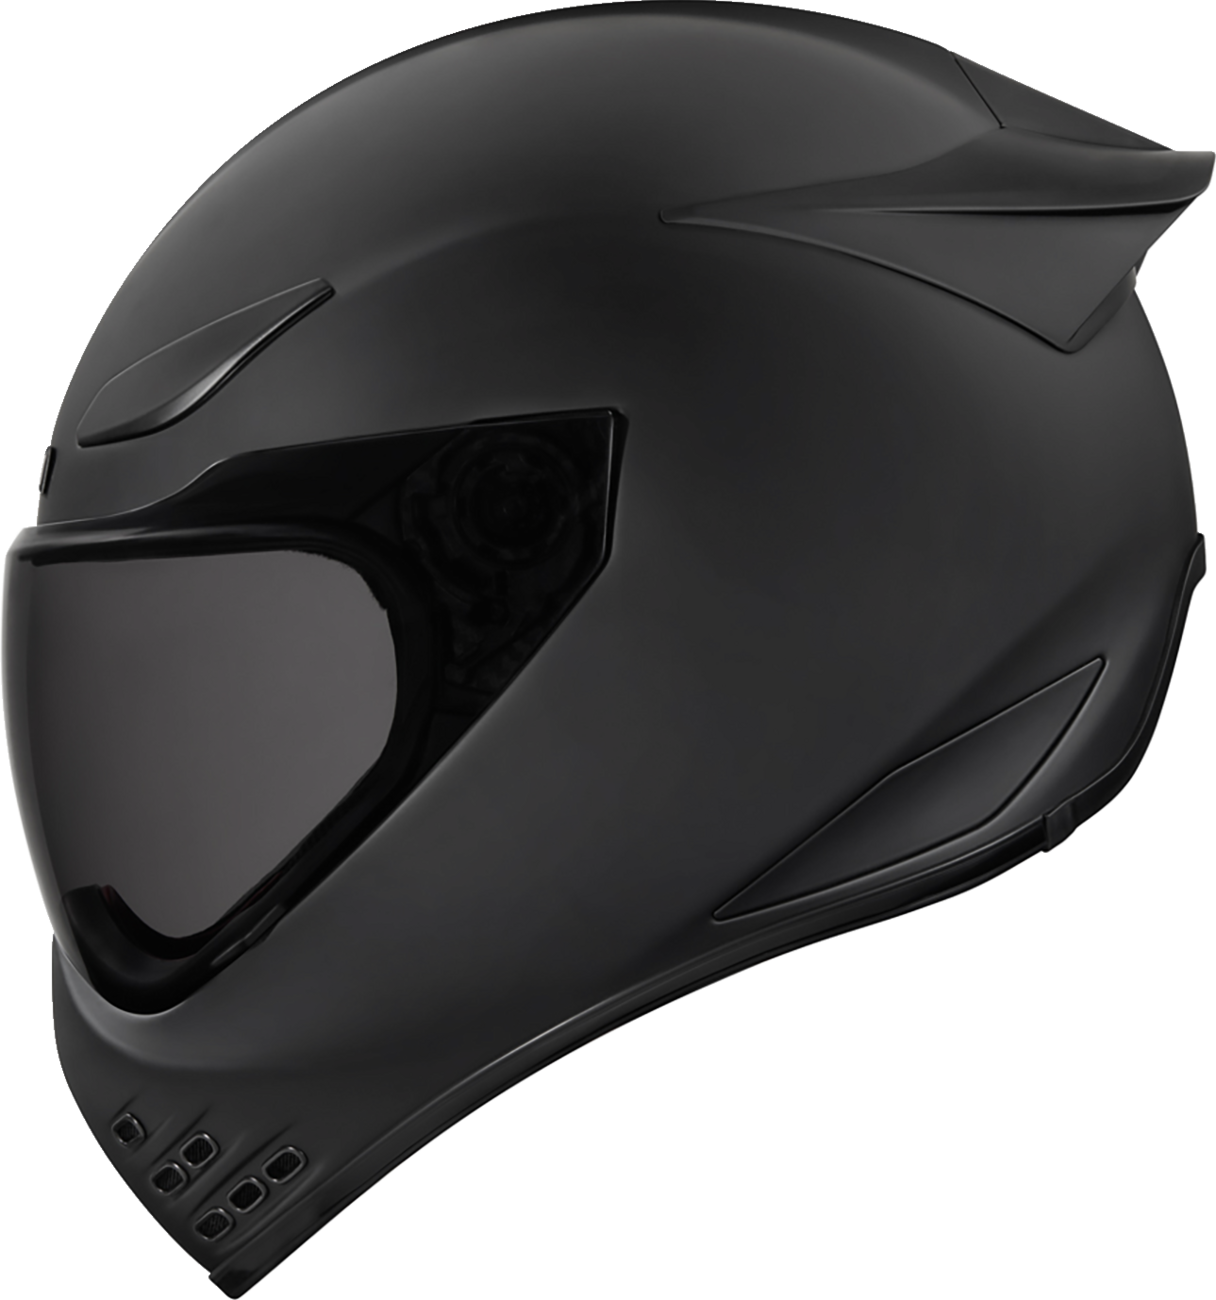 ICON Domain™ Helmet - Cornelius - Rubatone - XL 0101-15460